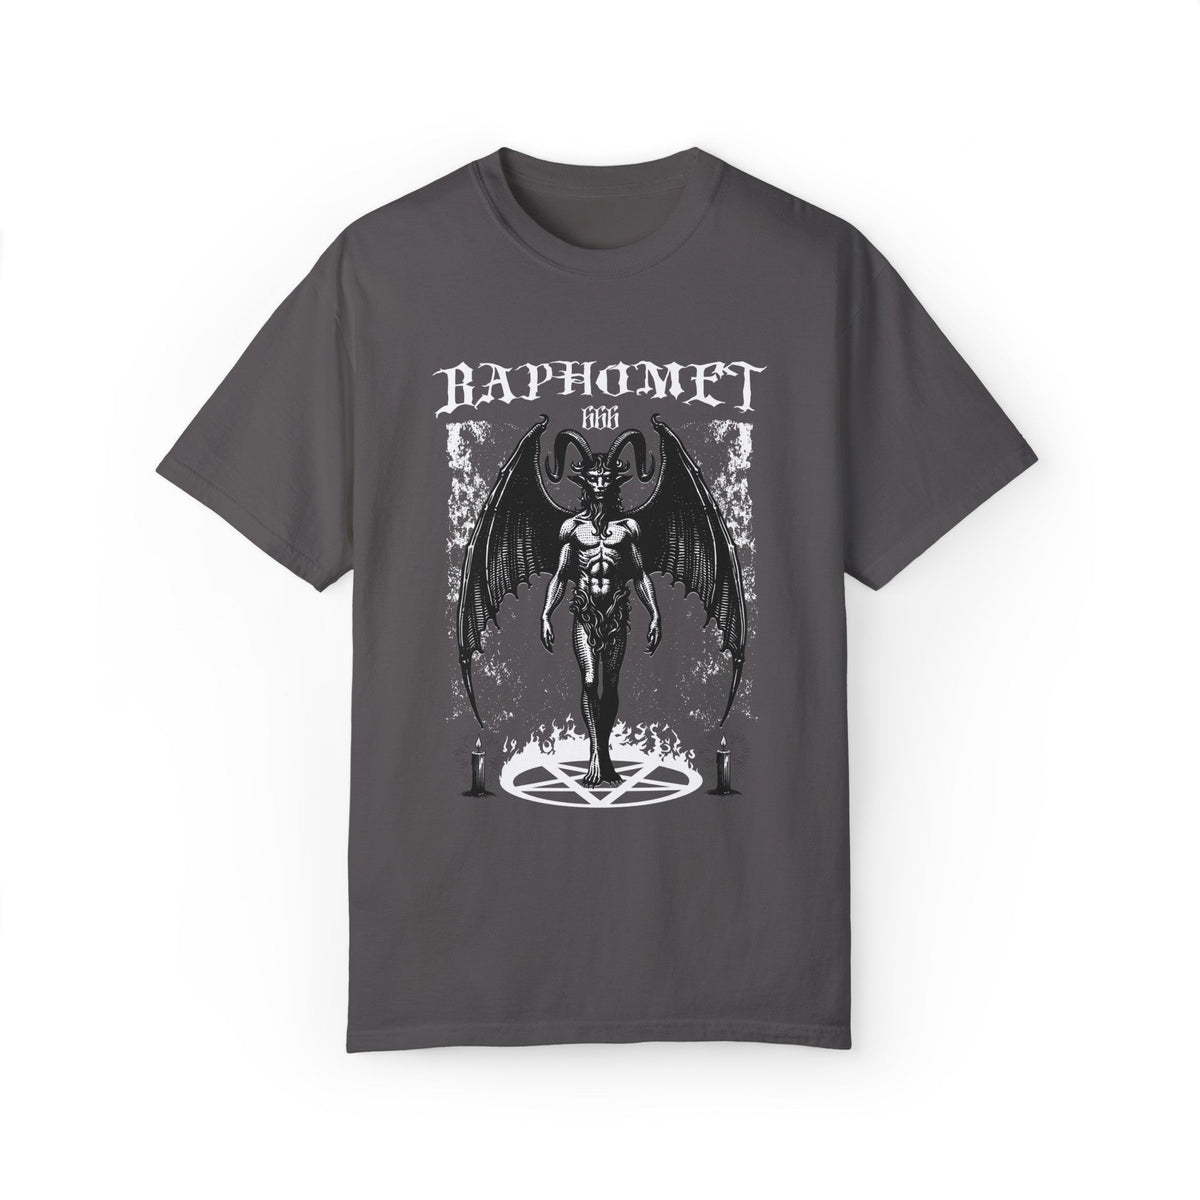 Baphomet Oversized Beefy Tee - Goth Cloth Co.T - Shirt10370790423825834300